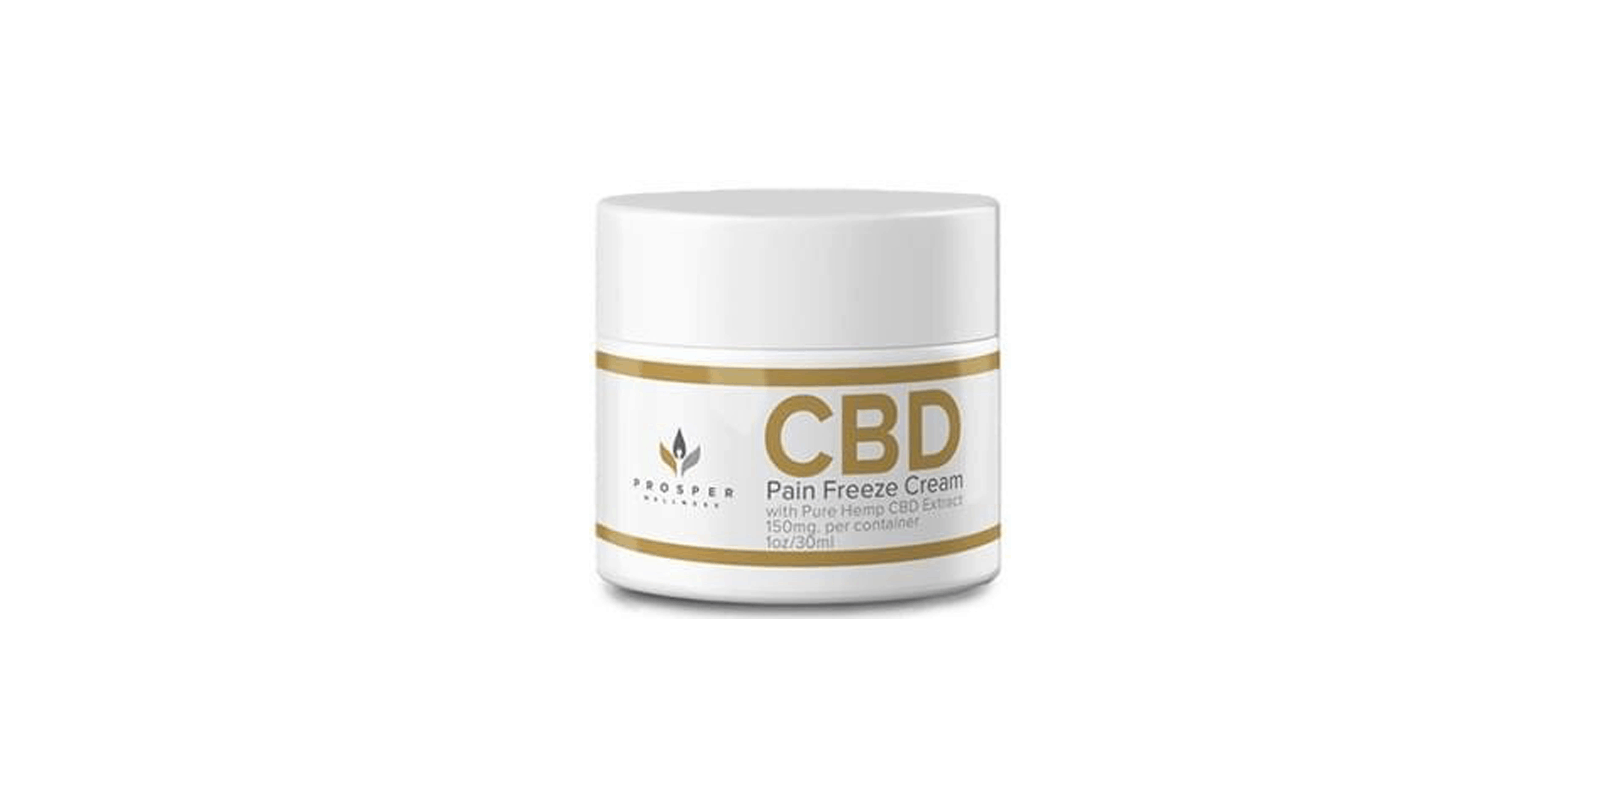 Prosper CBD Pain Freeze Cream Reviews